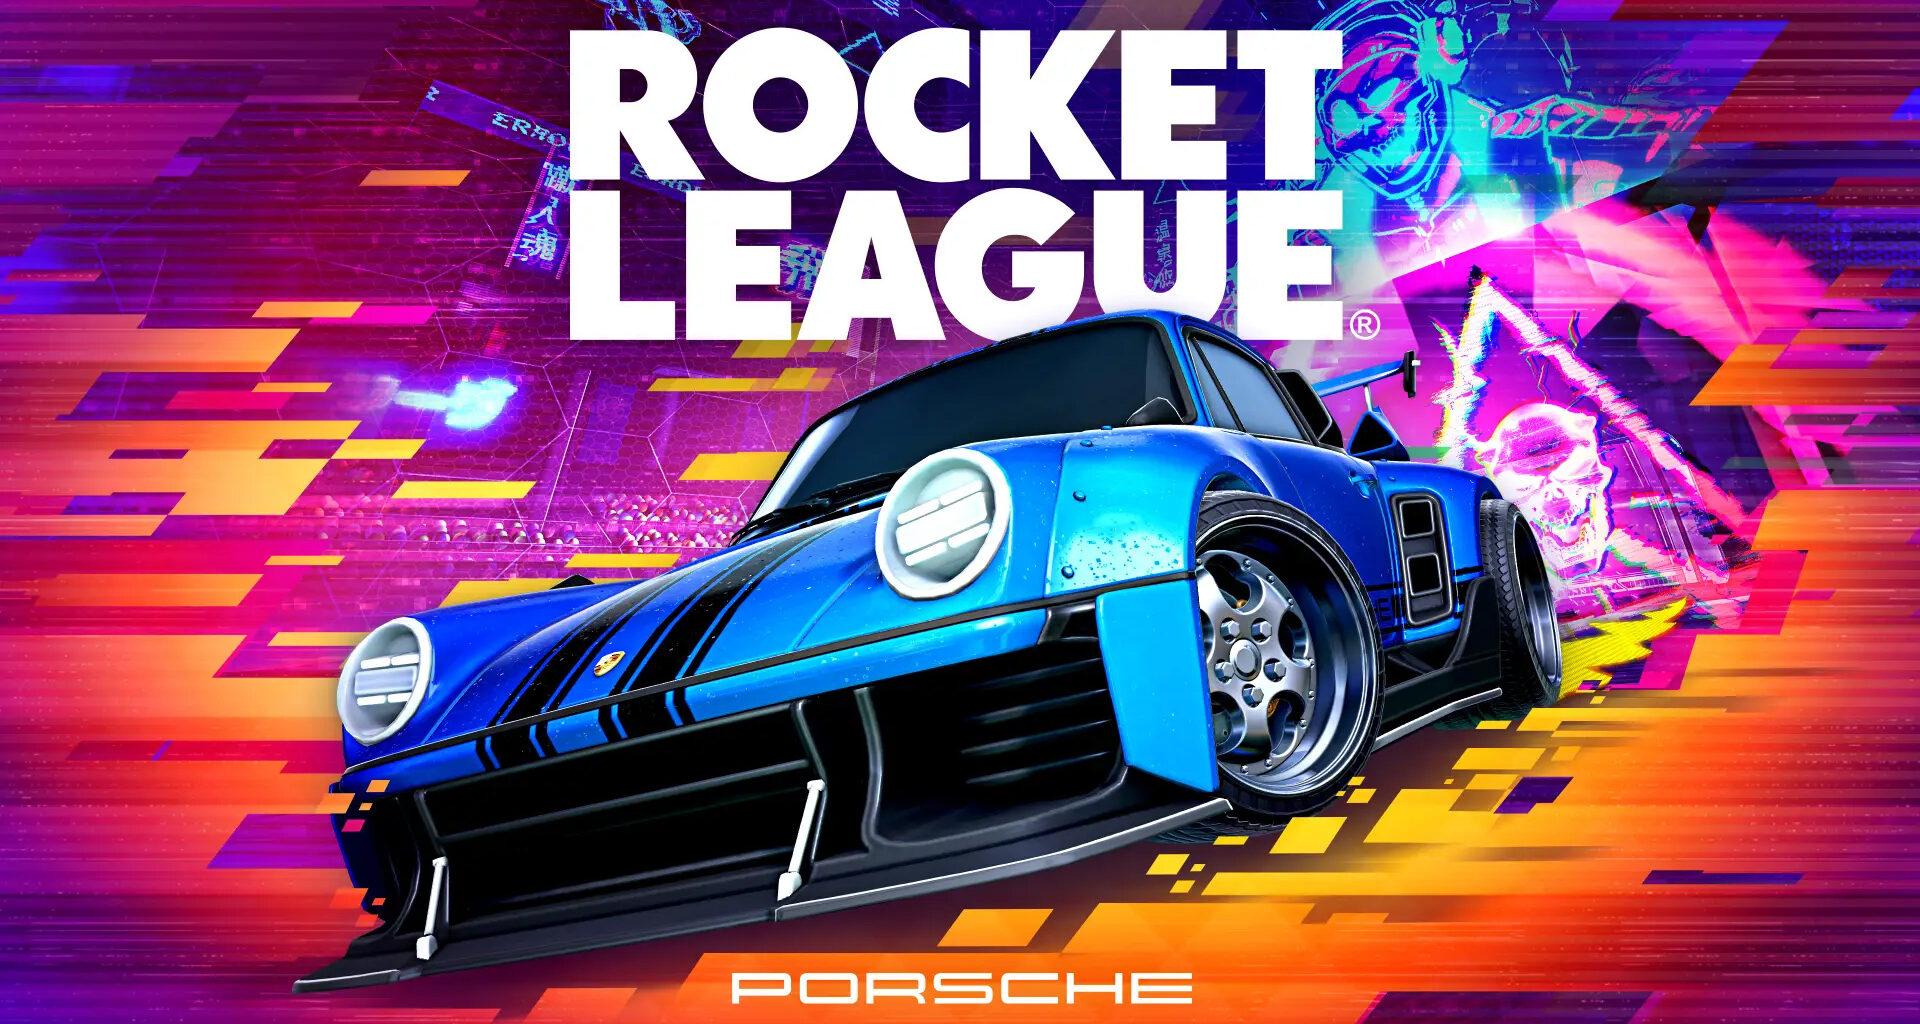 Rocket League's Season 12 adds the Porsche 911 Turbo (964)